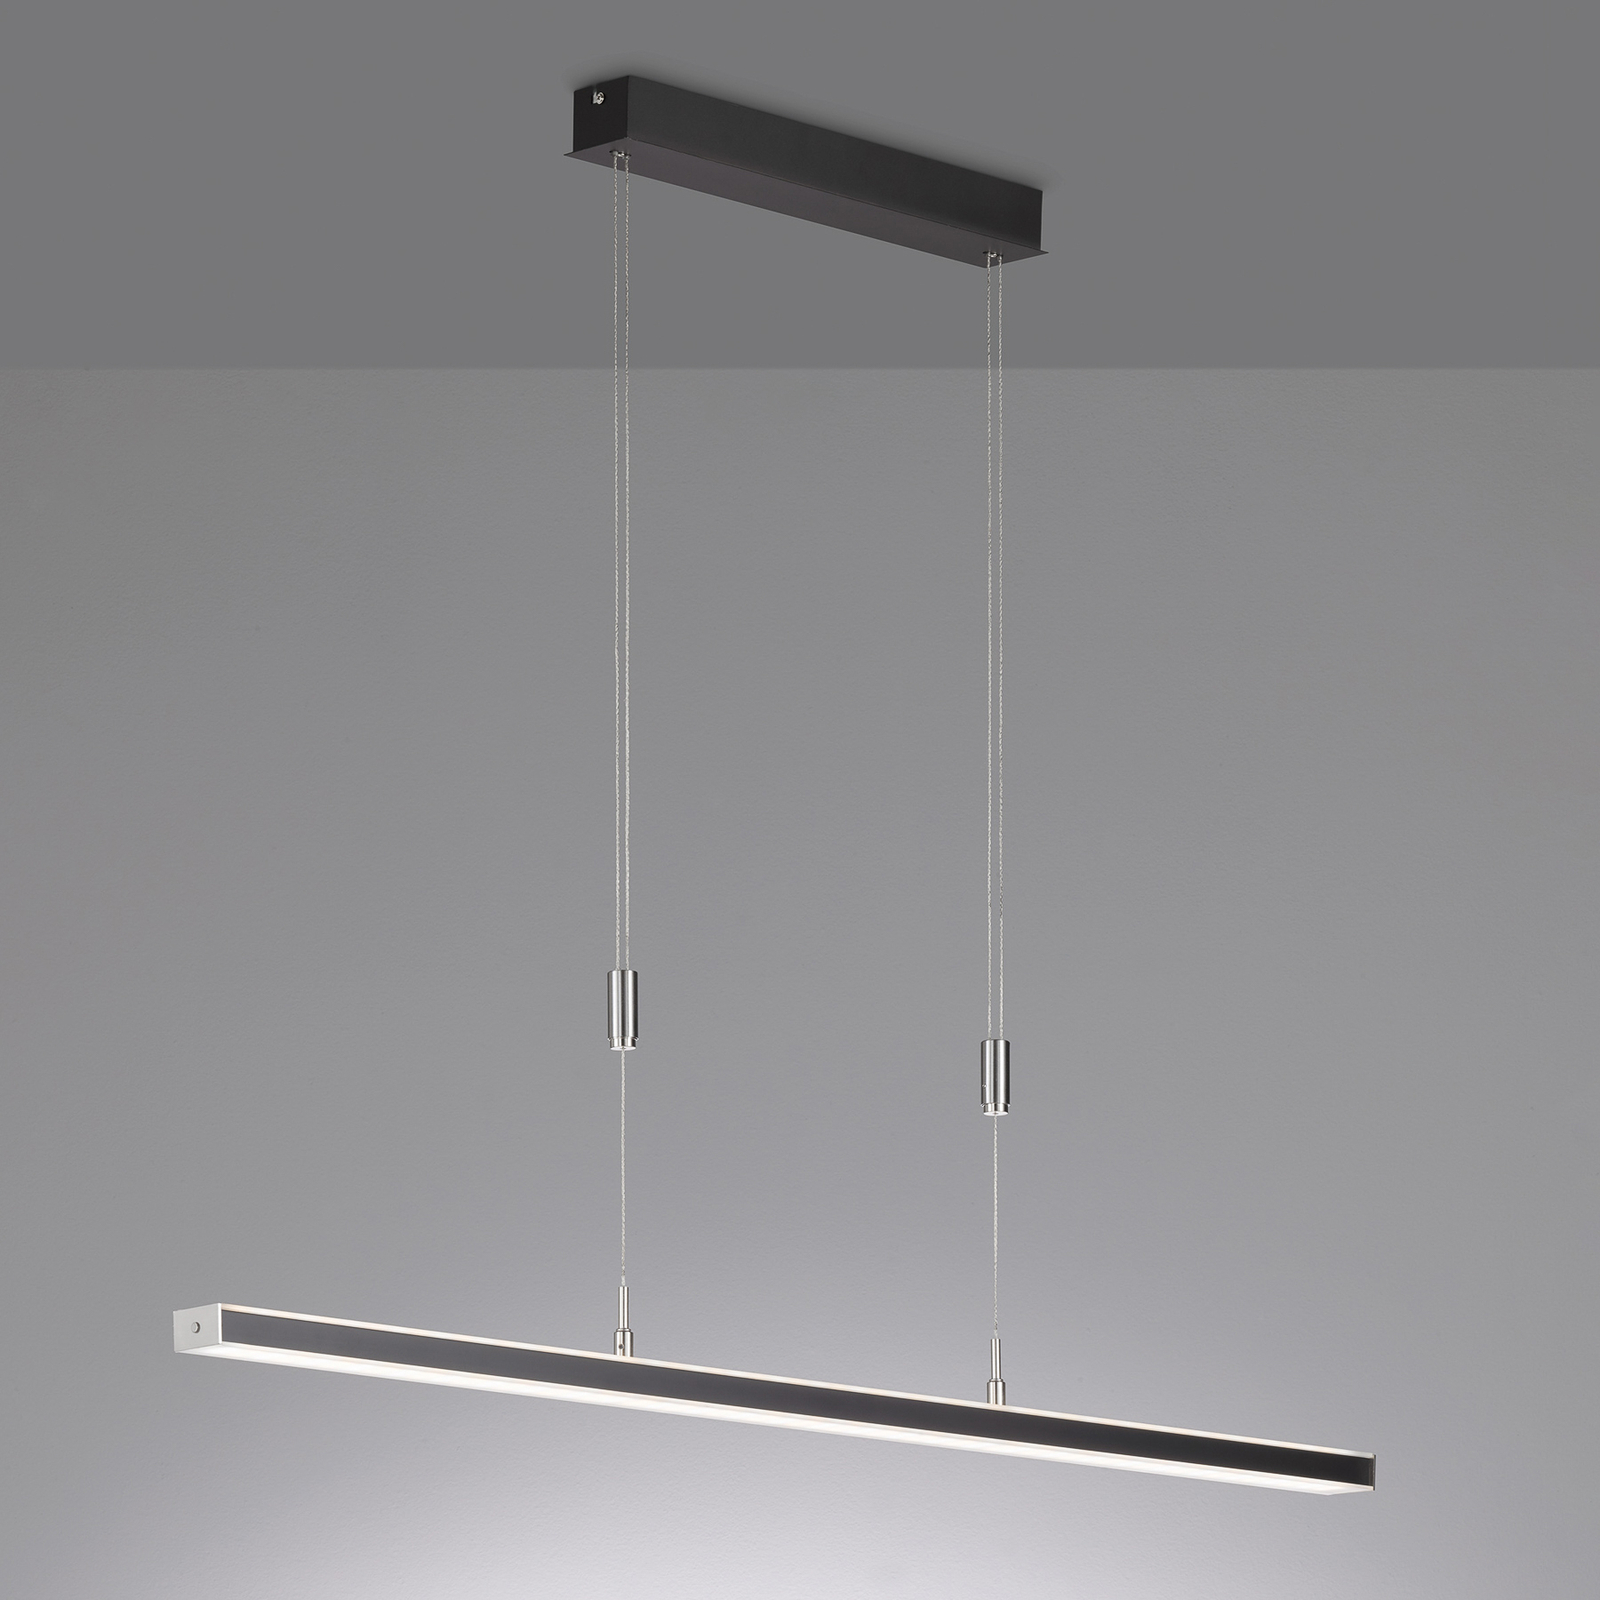 LED-Hängelampe Vitan, sandschwarz, Länge 115 cm, 2-flg., CCT